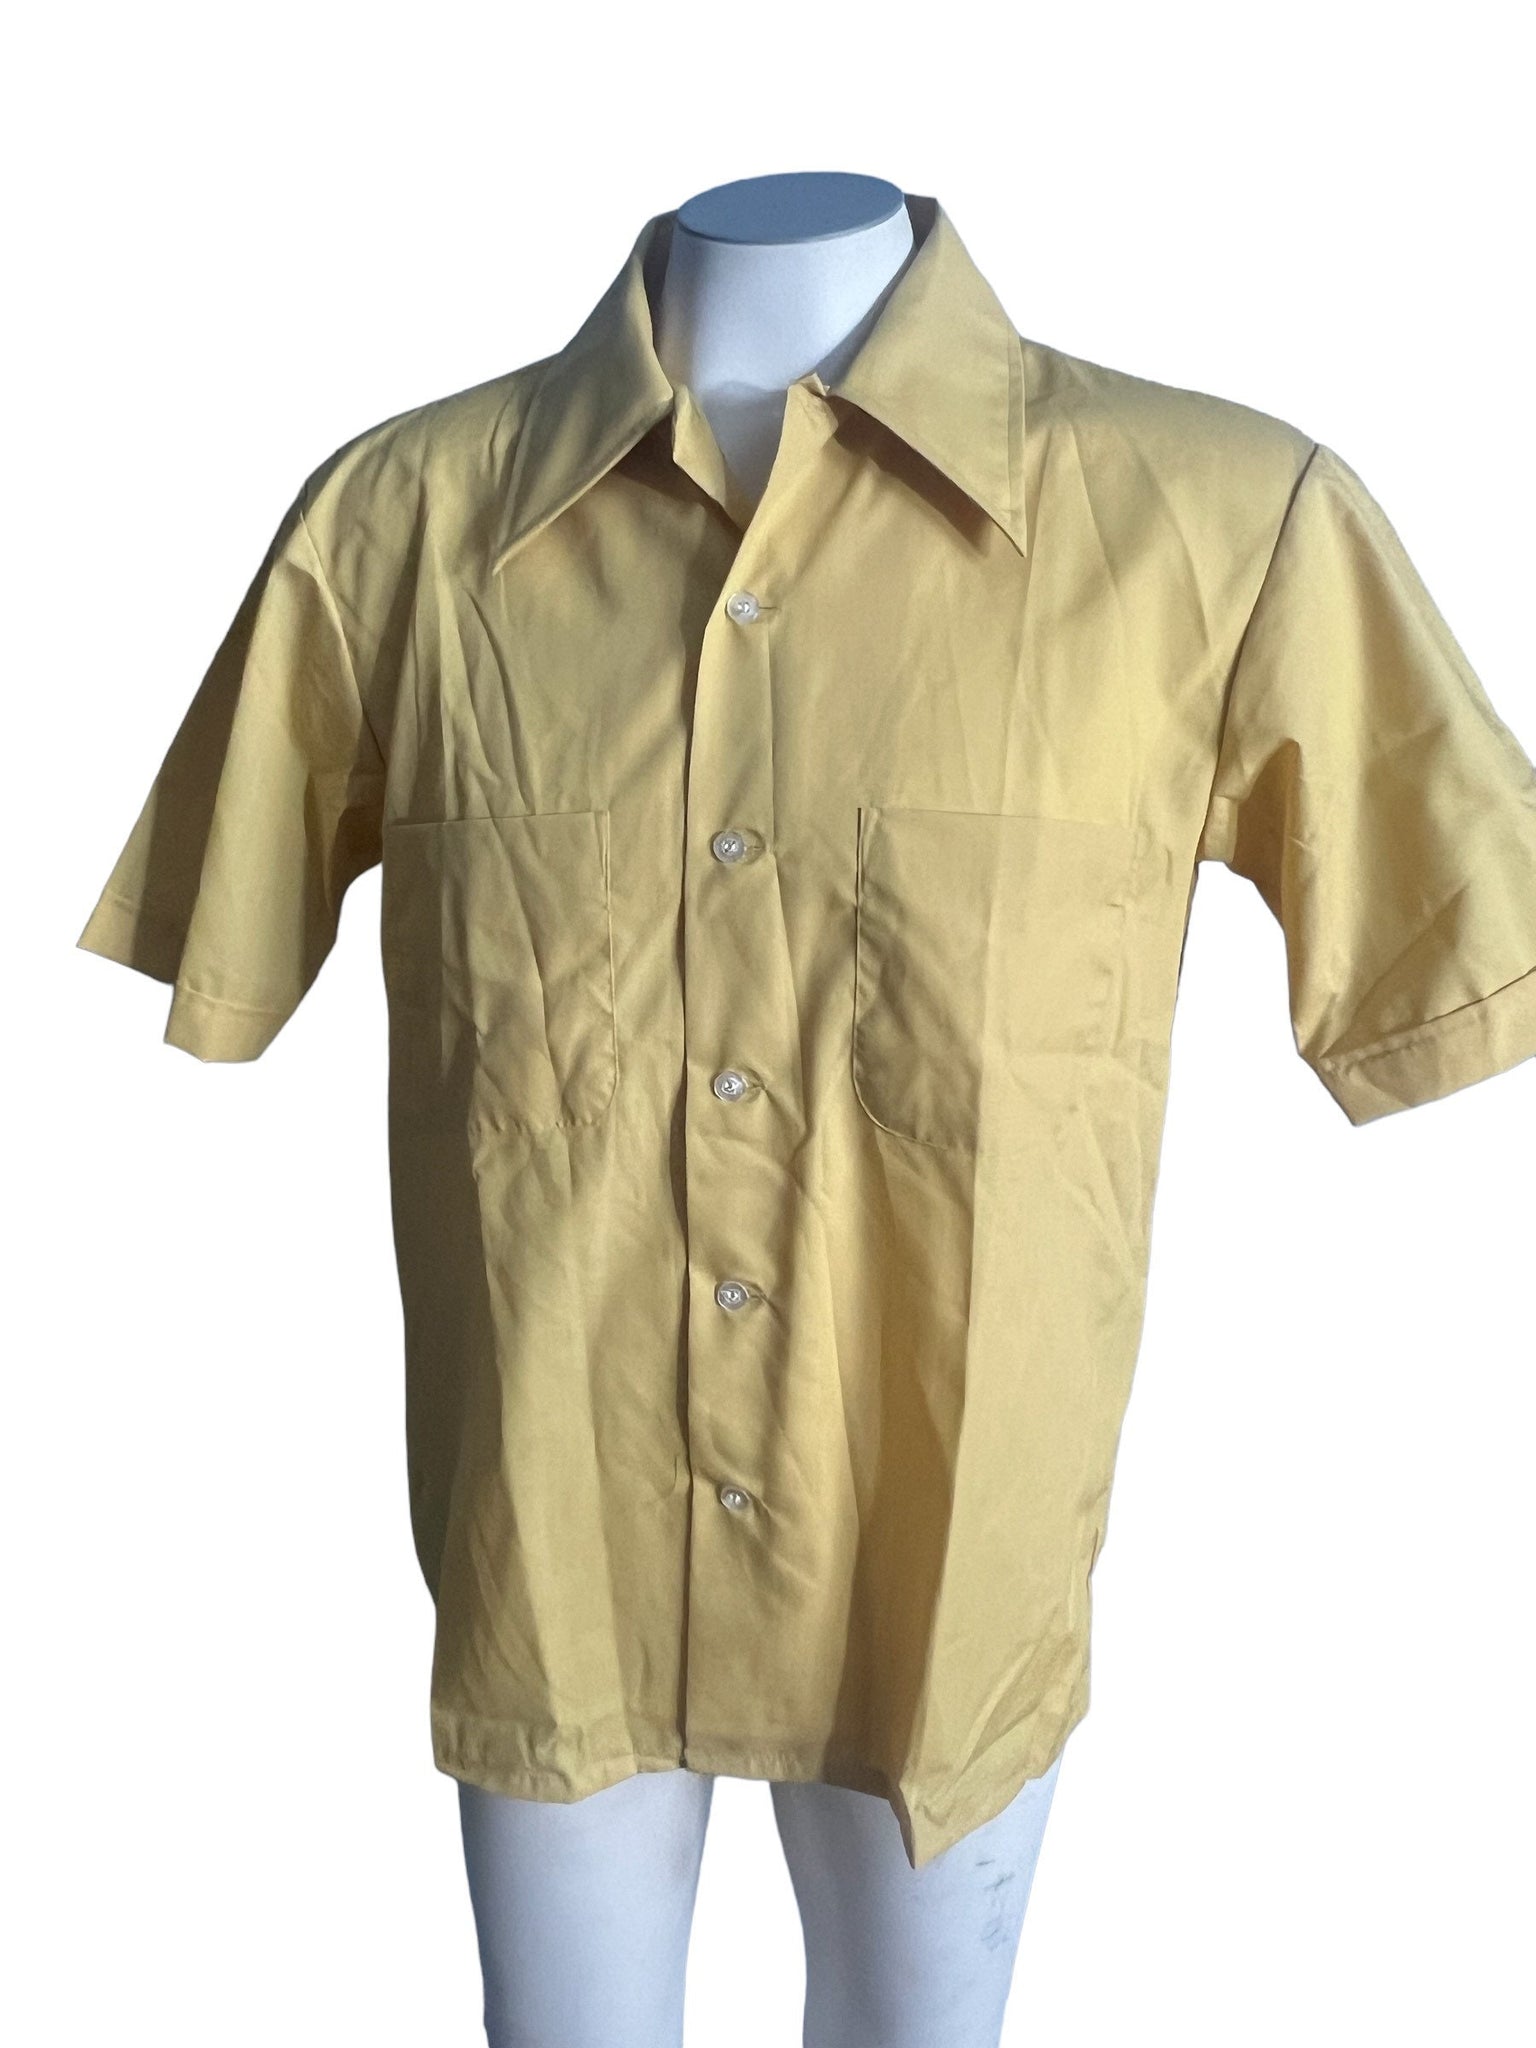 Vintage 70's yellow dress shirt M